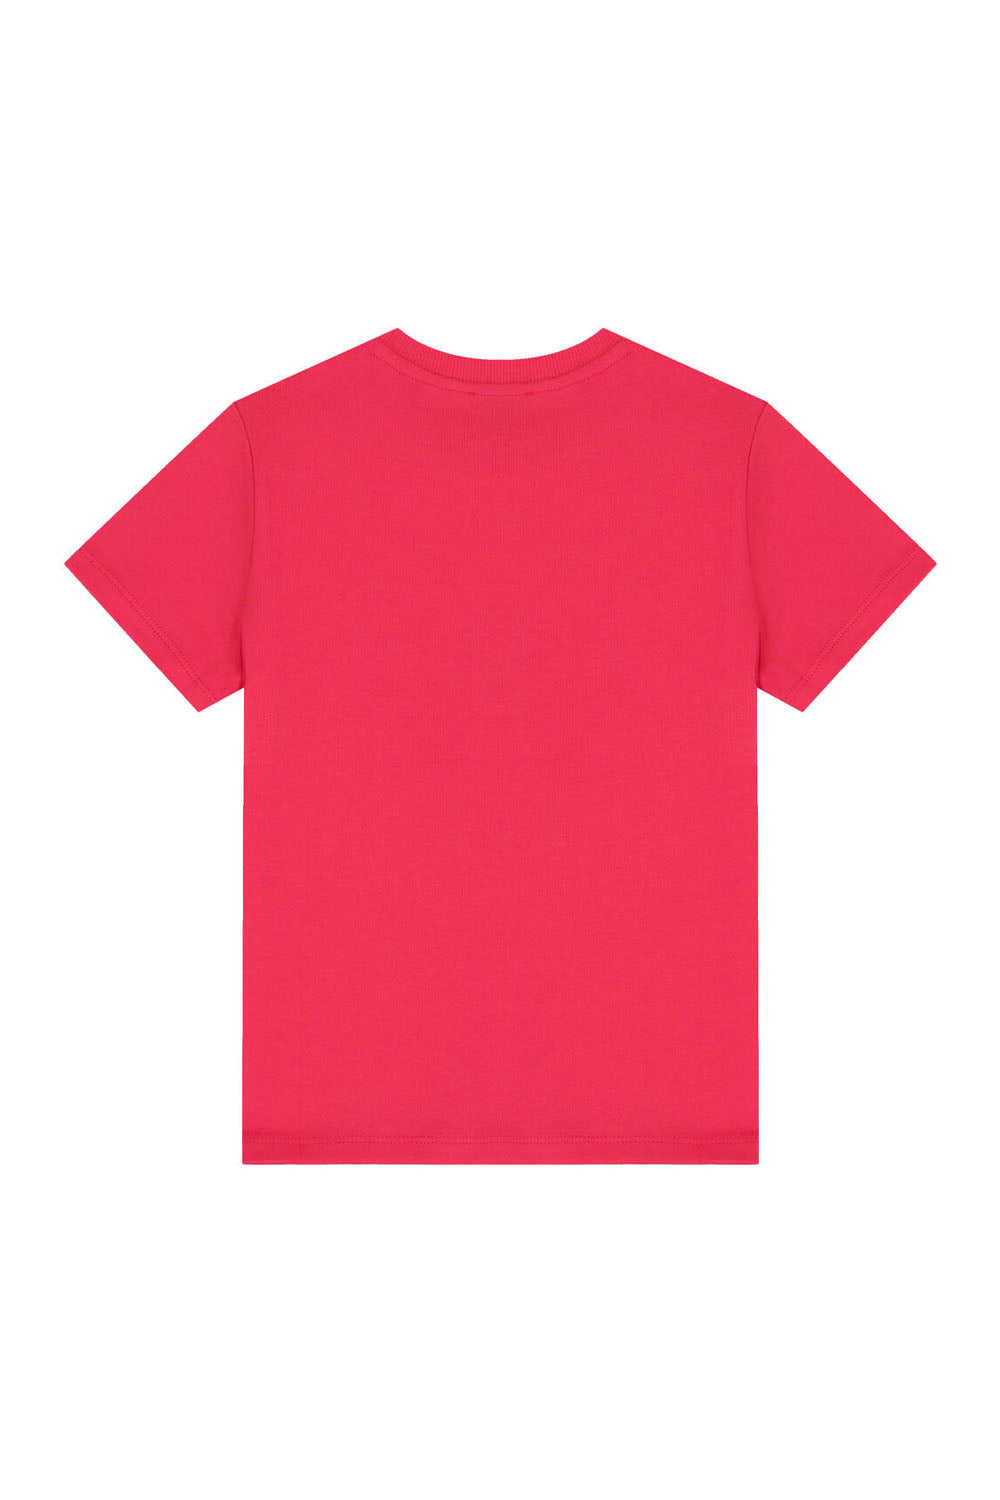 Tiger Print Short Sleeve Jersey T-Shirt for Girls Tiger Print Short Sleeve Jersey T-Shirt for Girls Maison7